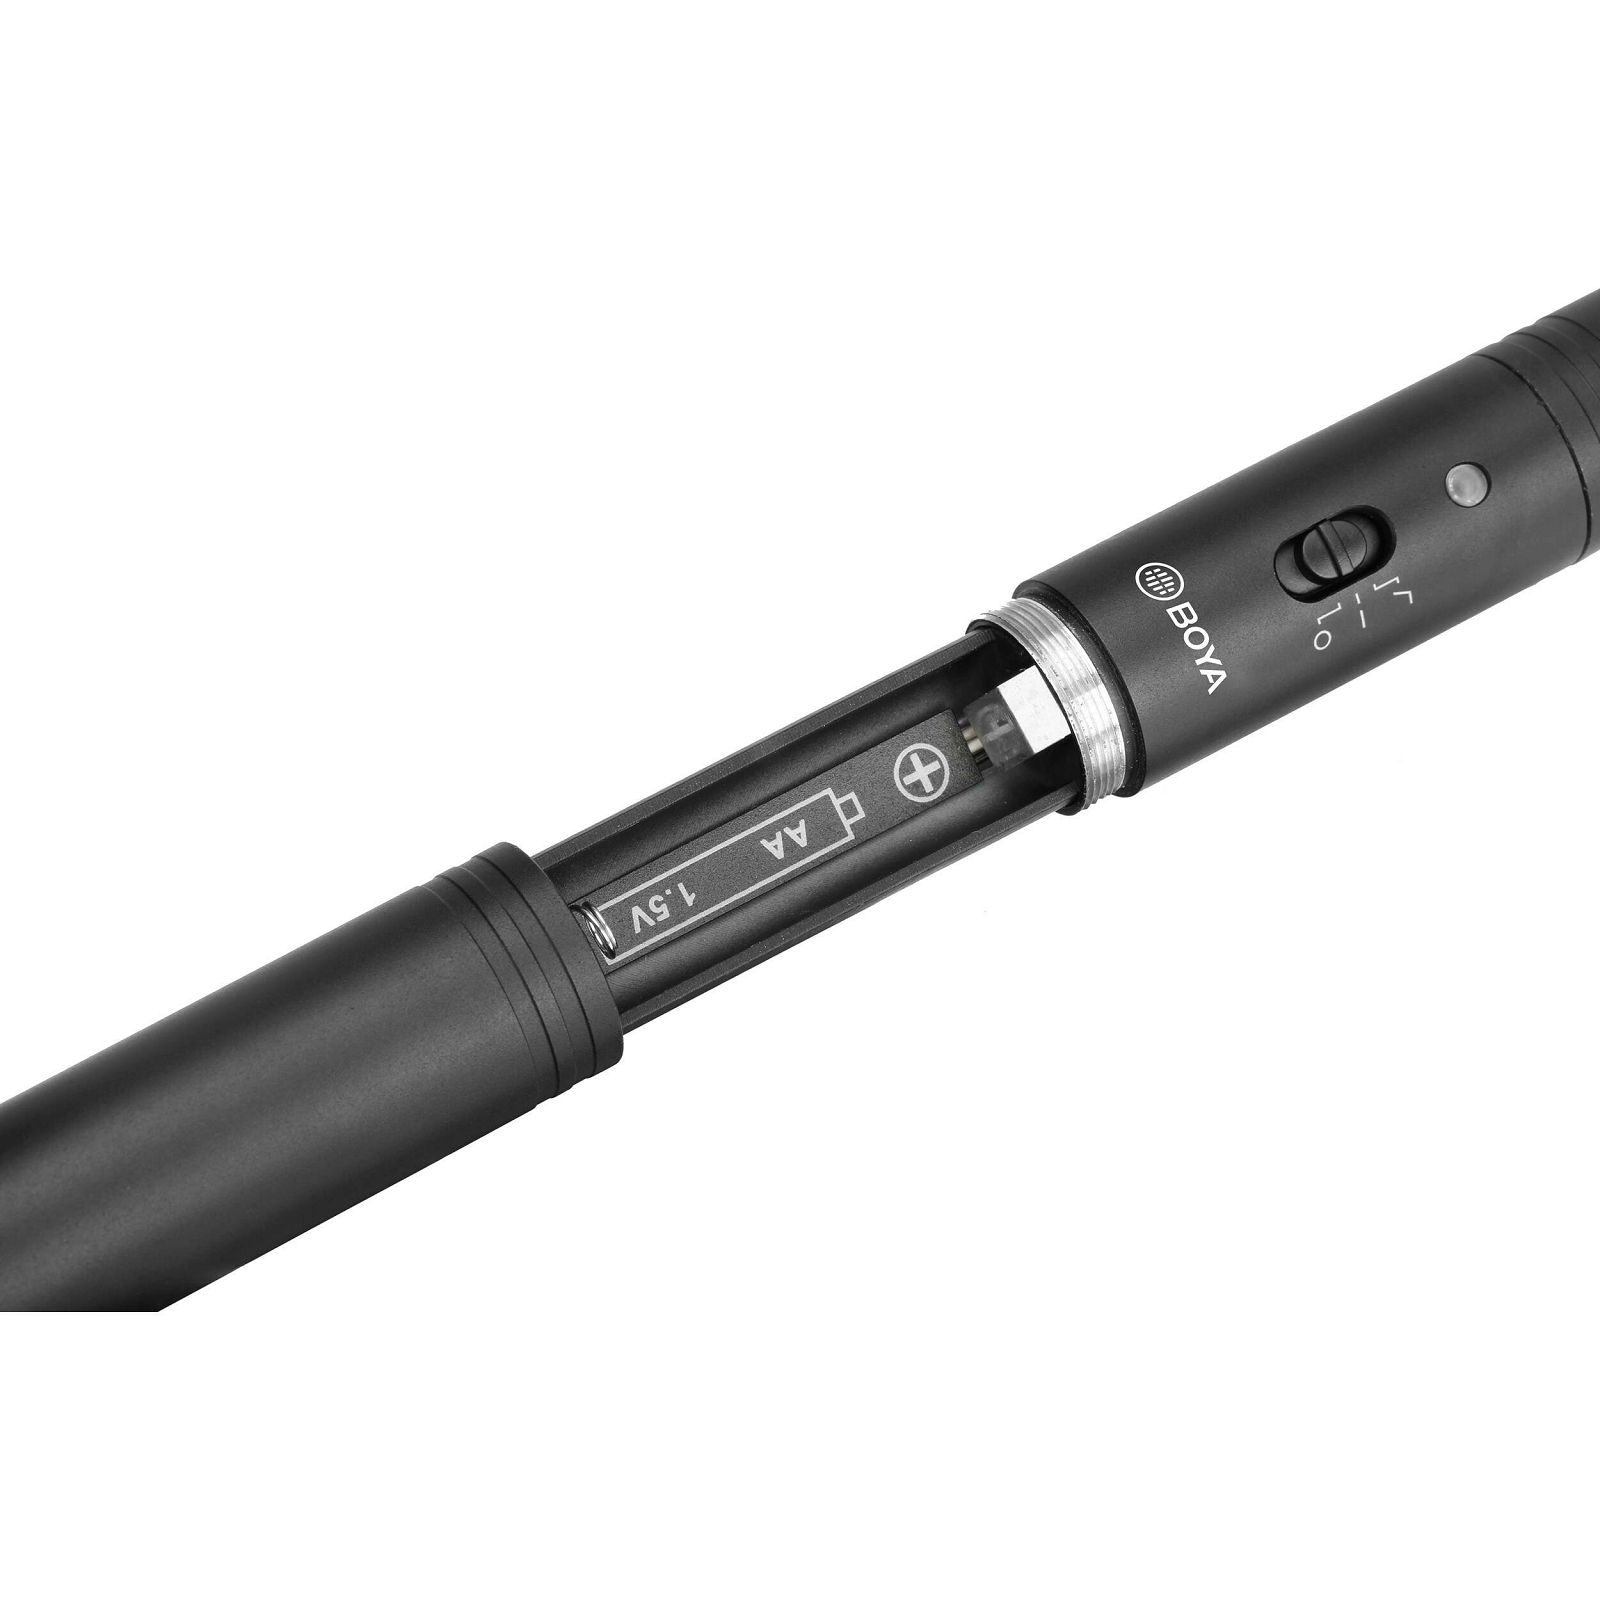 Boya BY-PVM3000S Shotgun Small mikrofon